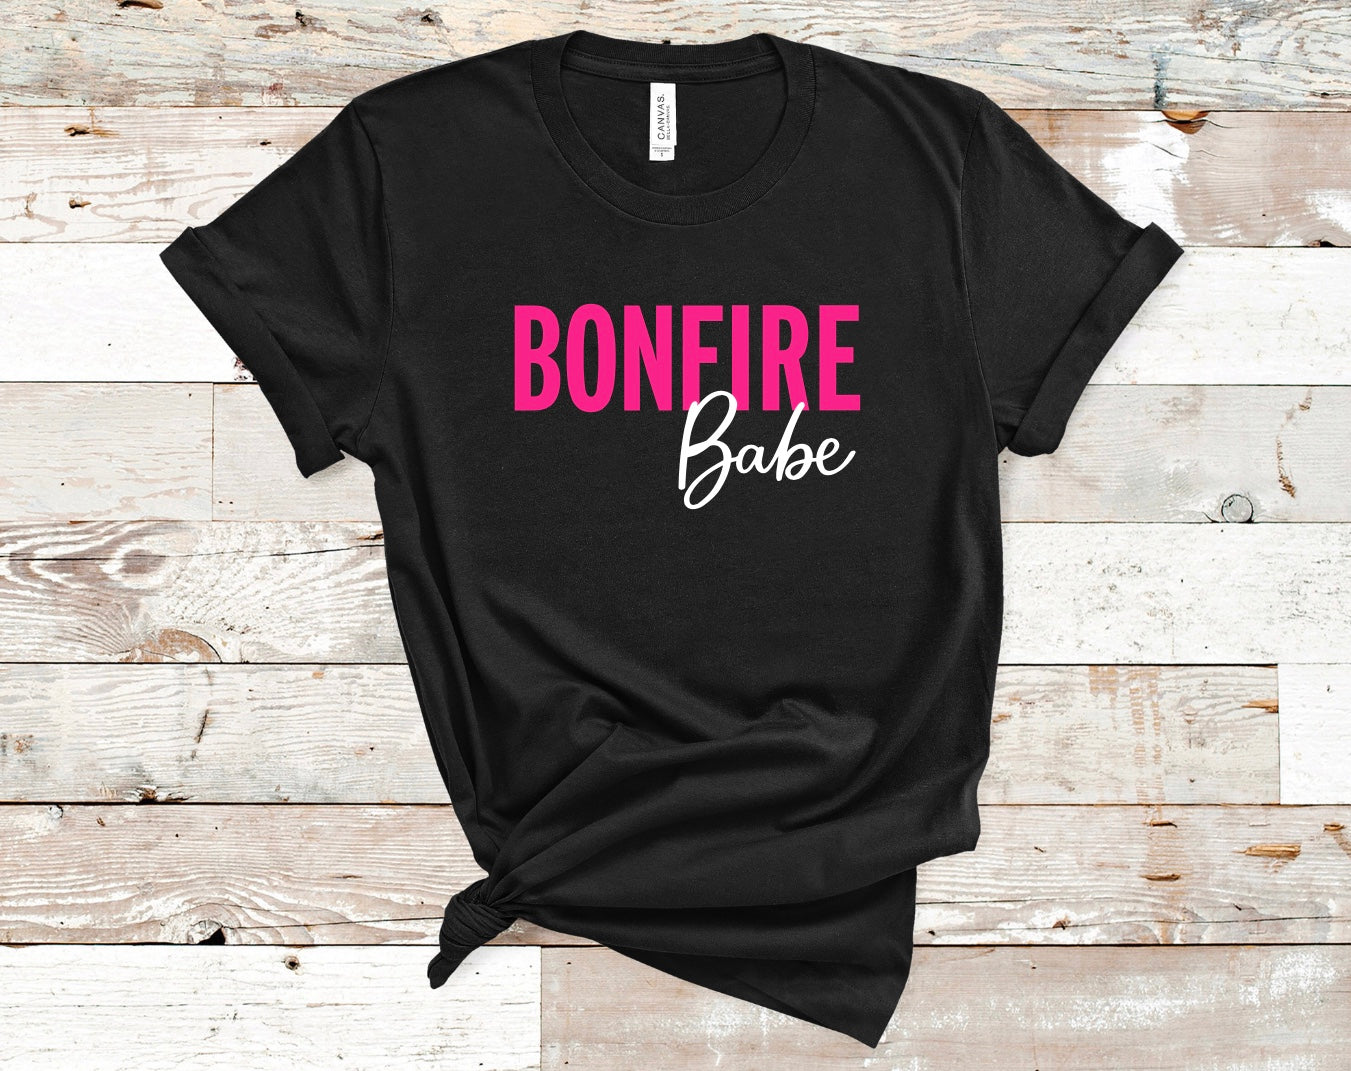 Bonfire babe t-shirt 